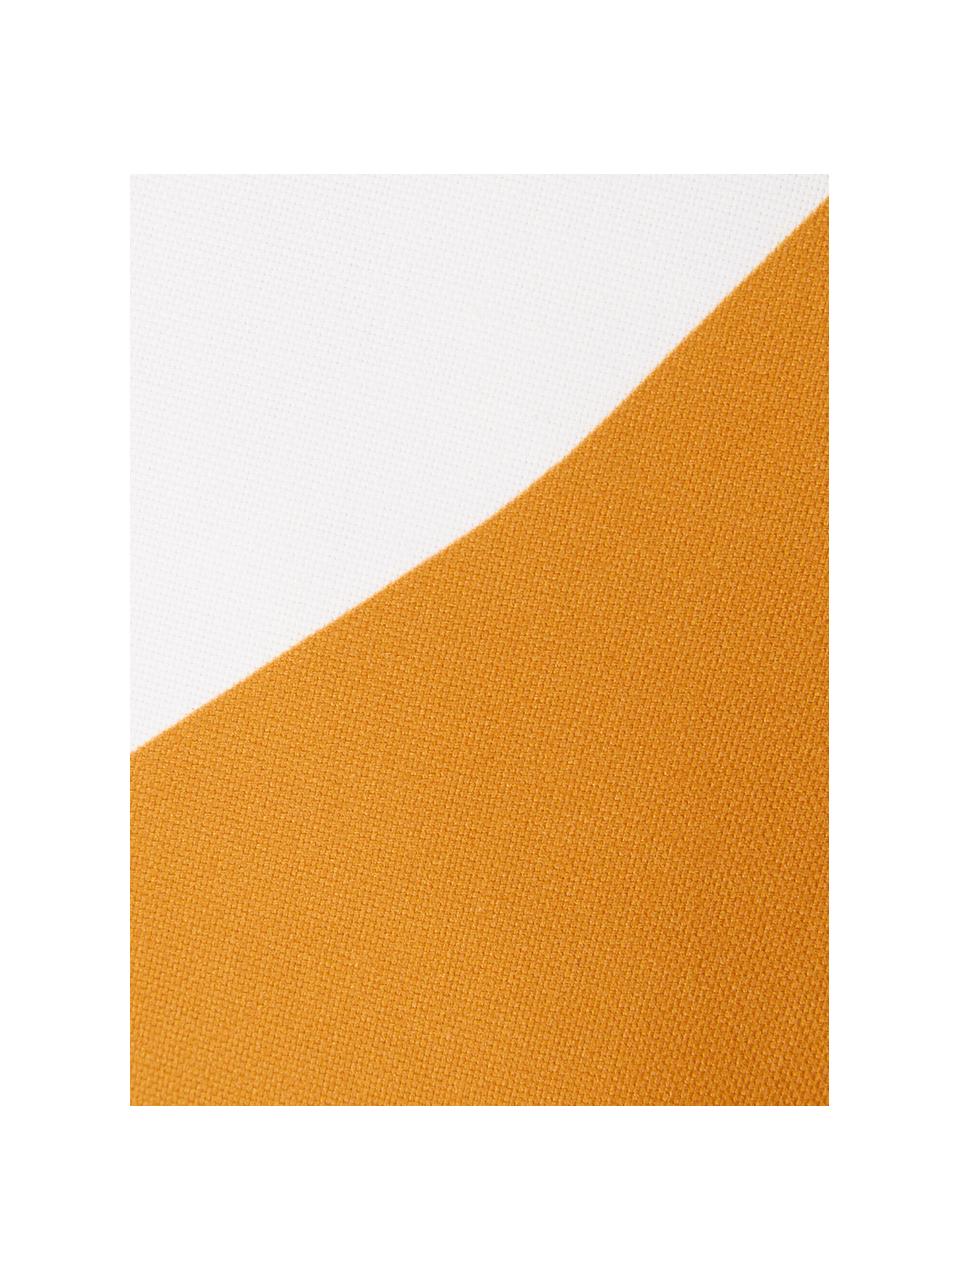 Federa arredo con forme geometriche Linn, Bianco, blu scuro, grigio, arancione, Larg. 40 x Lung. 40 cm